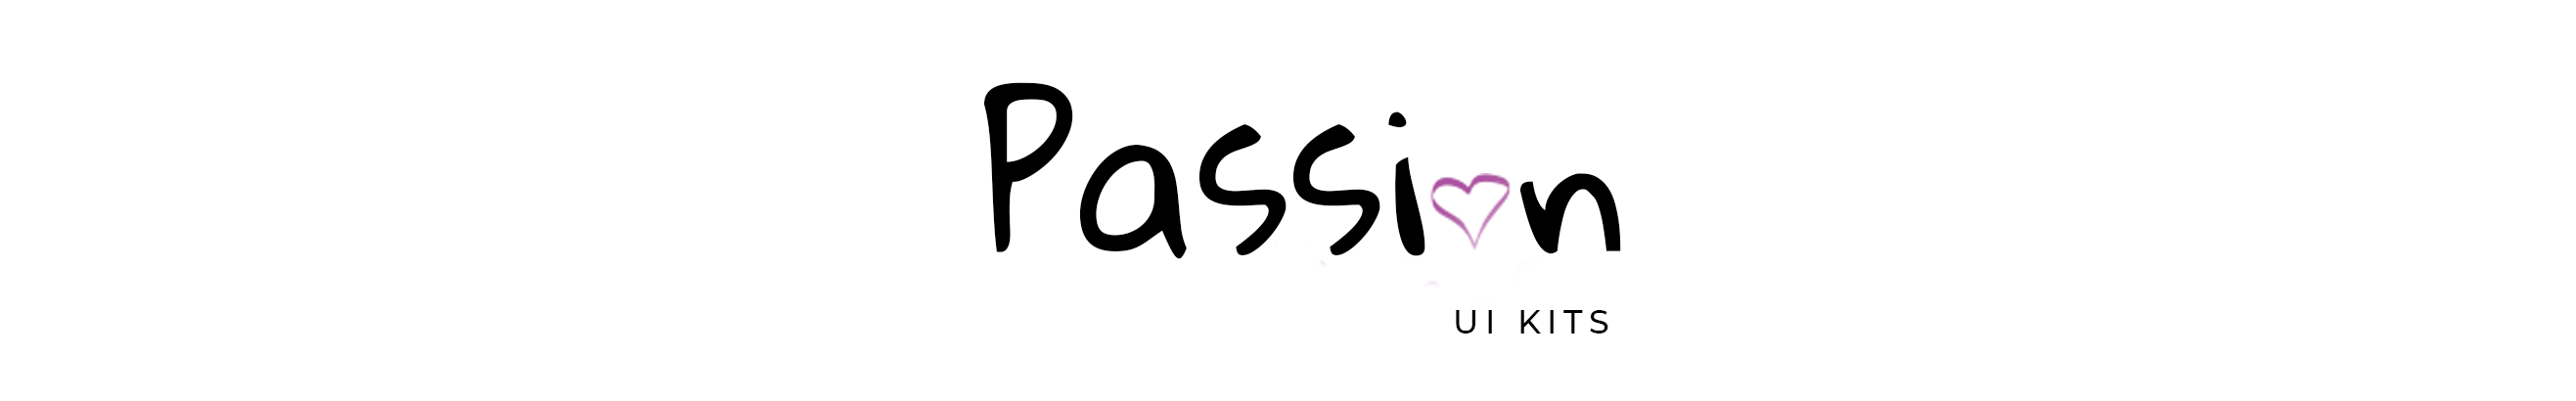 Passion UIKits's profile banner